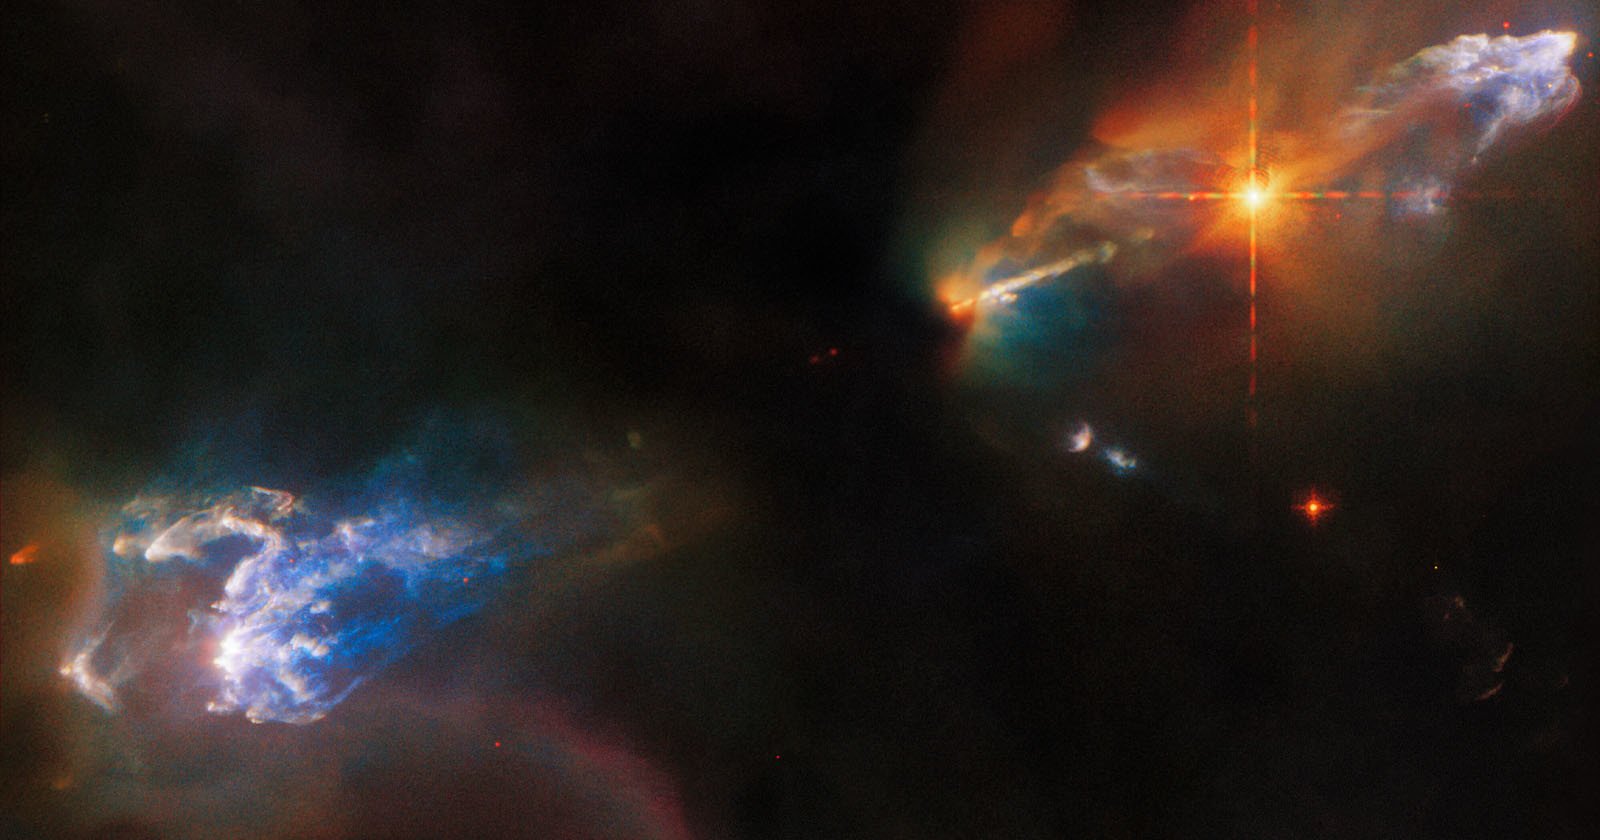  hubble captures spectacular photo turbulent stellar nursery 